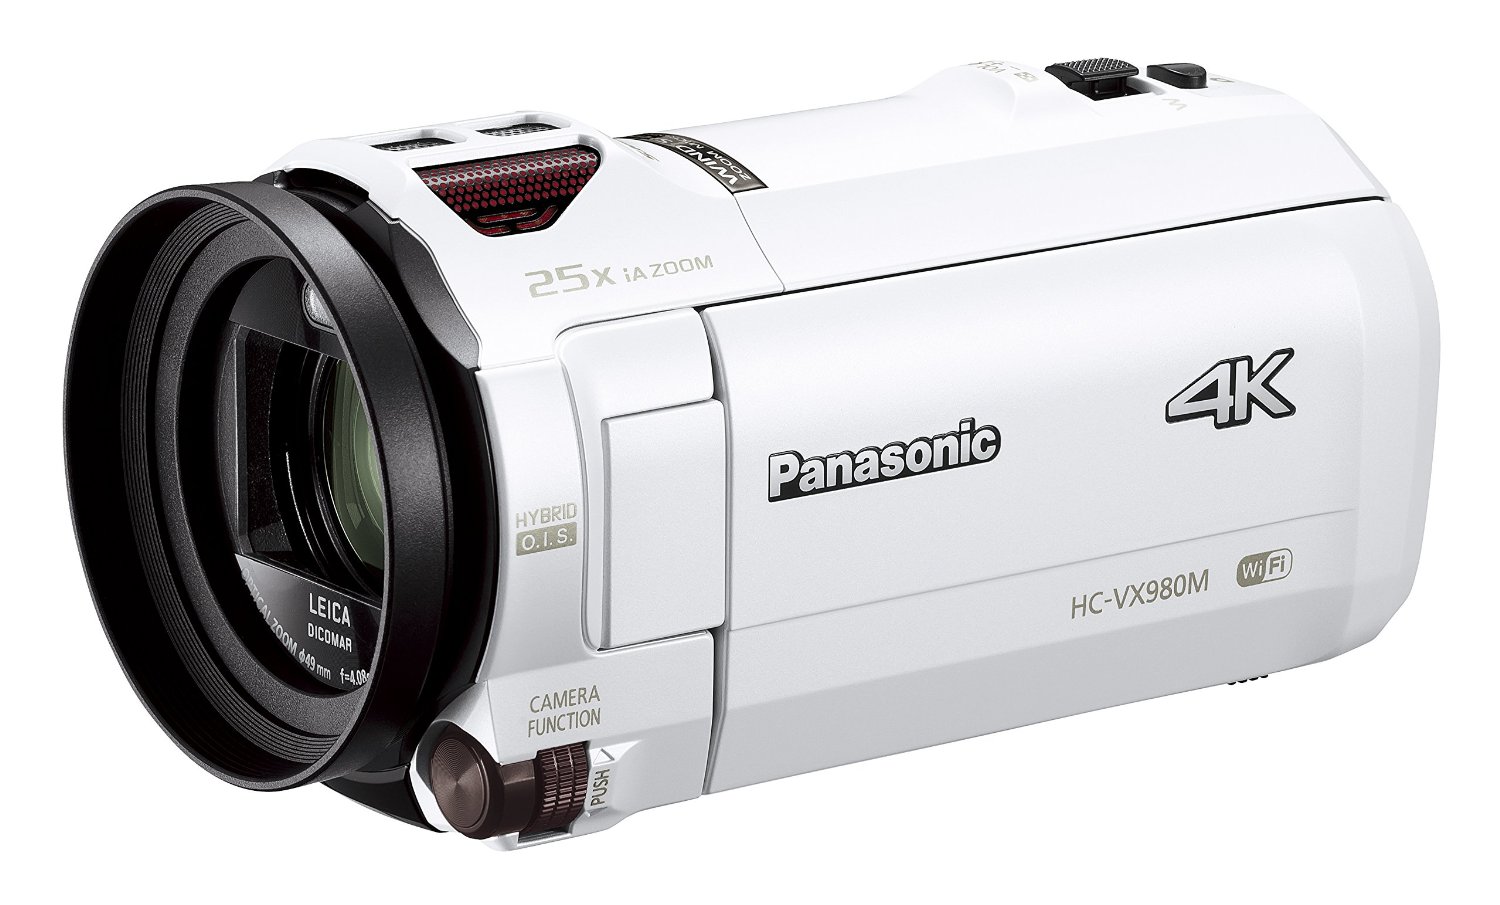 Panasonic(パナソニック)のデジタルビデオカメラなど11点を